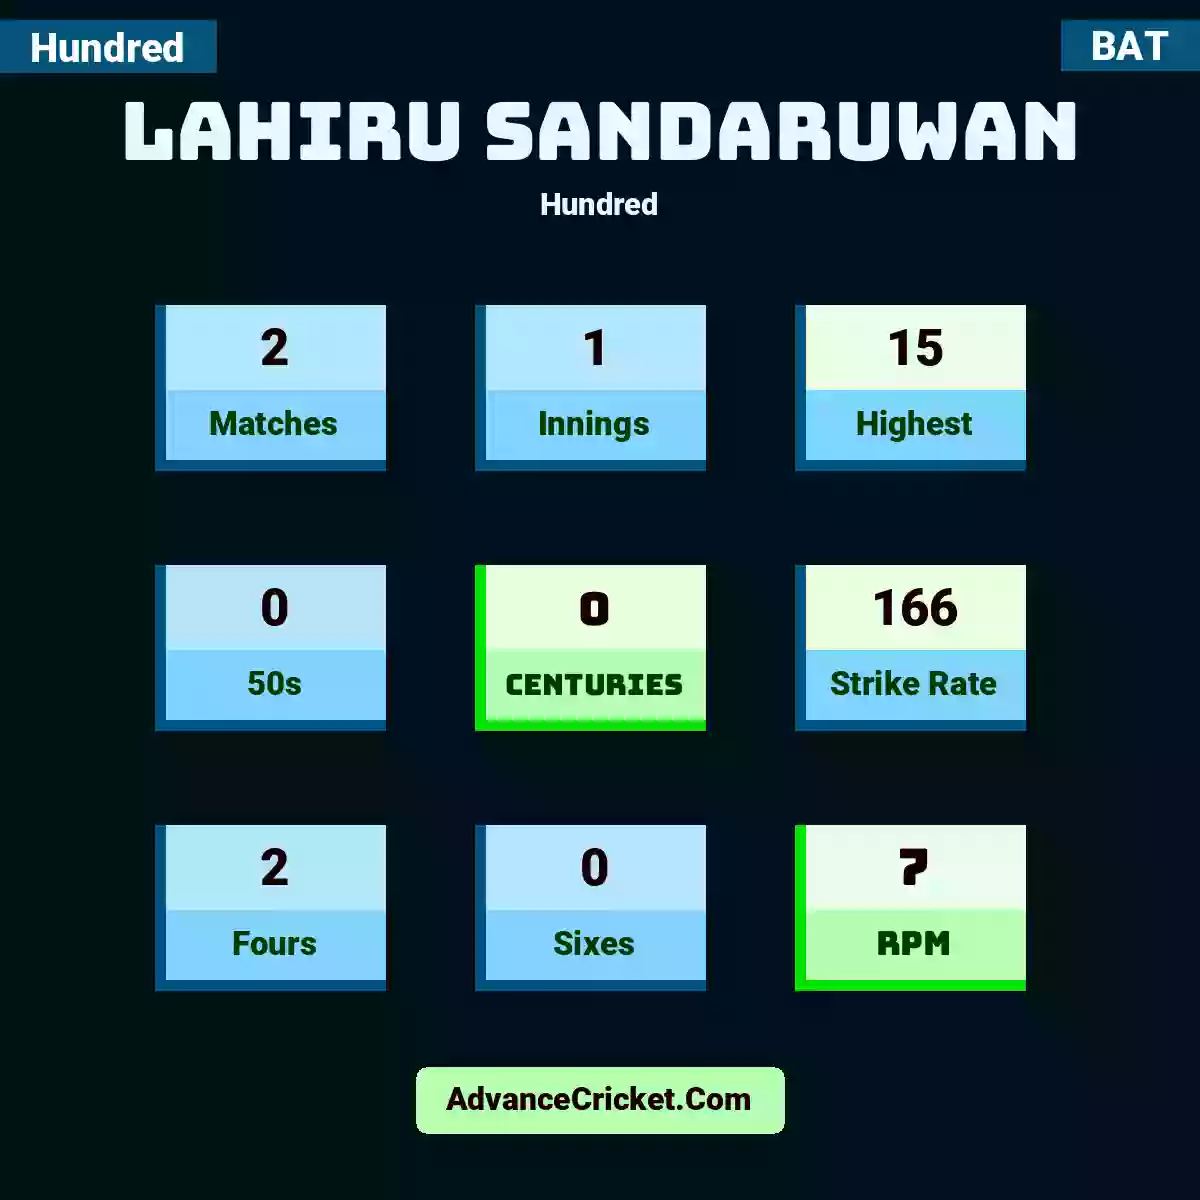 Lahiru Sandaruwan Hundred , Lahiru Sandaruwan played 2 matches, scored 15 runs as highest, 0 half-centuries, and 0 centuries, with a strike rate of 166. L.Sandaruwan hit 2 fours and 0 sixes, with an RPM of 7.